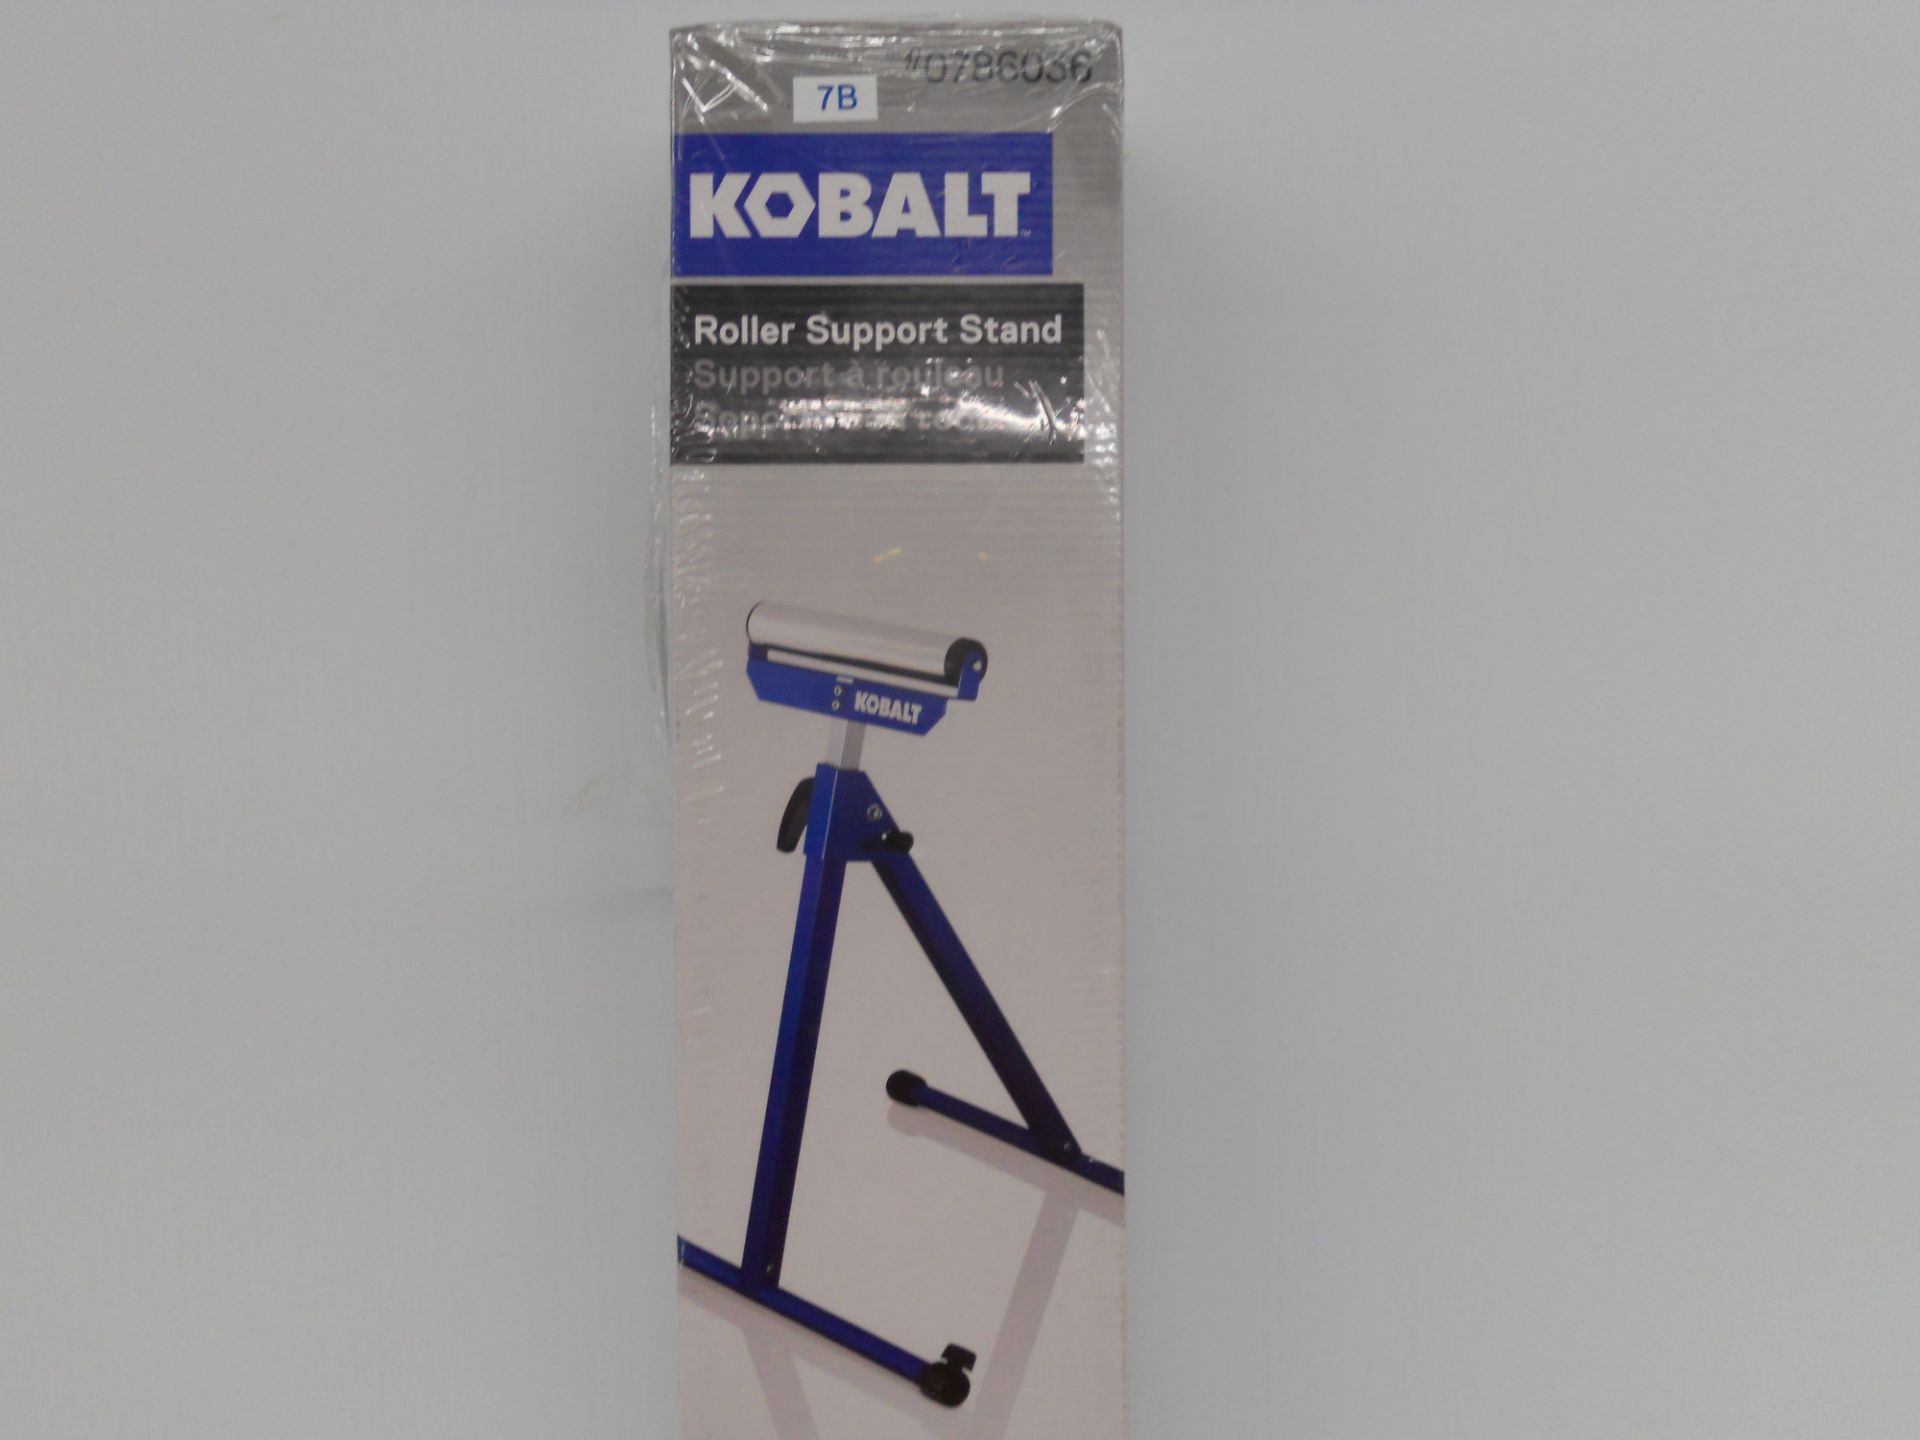 Kobalt Roller support stand